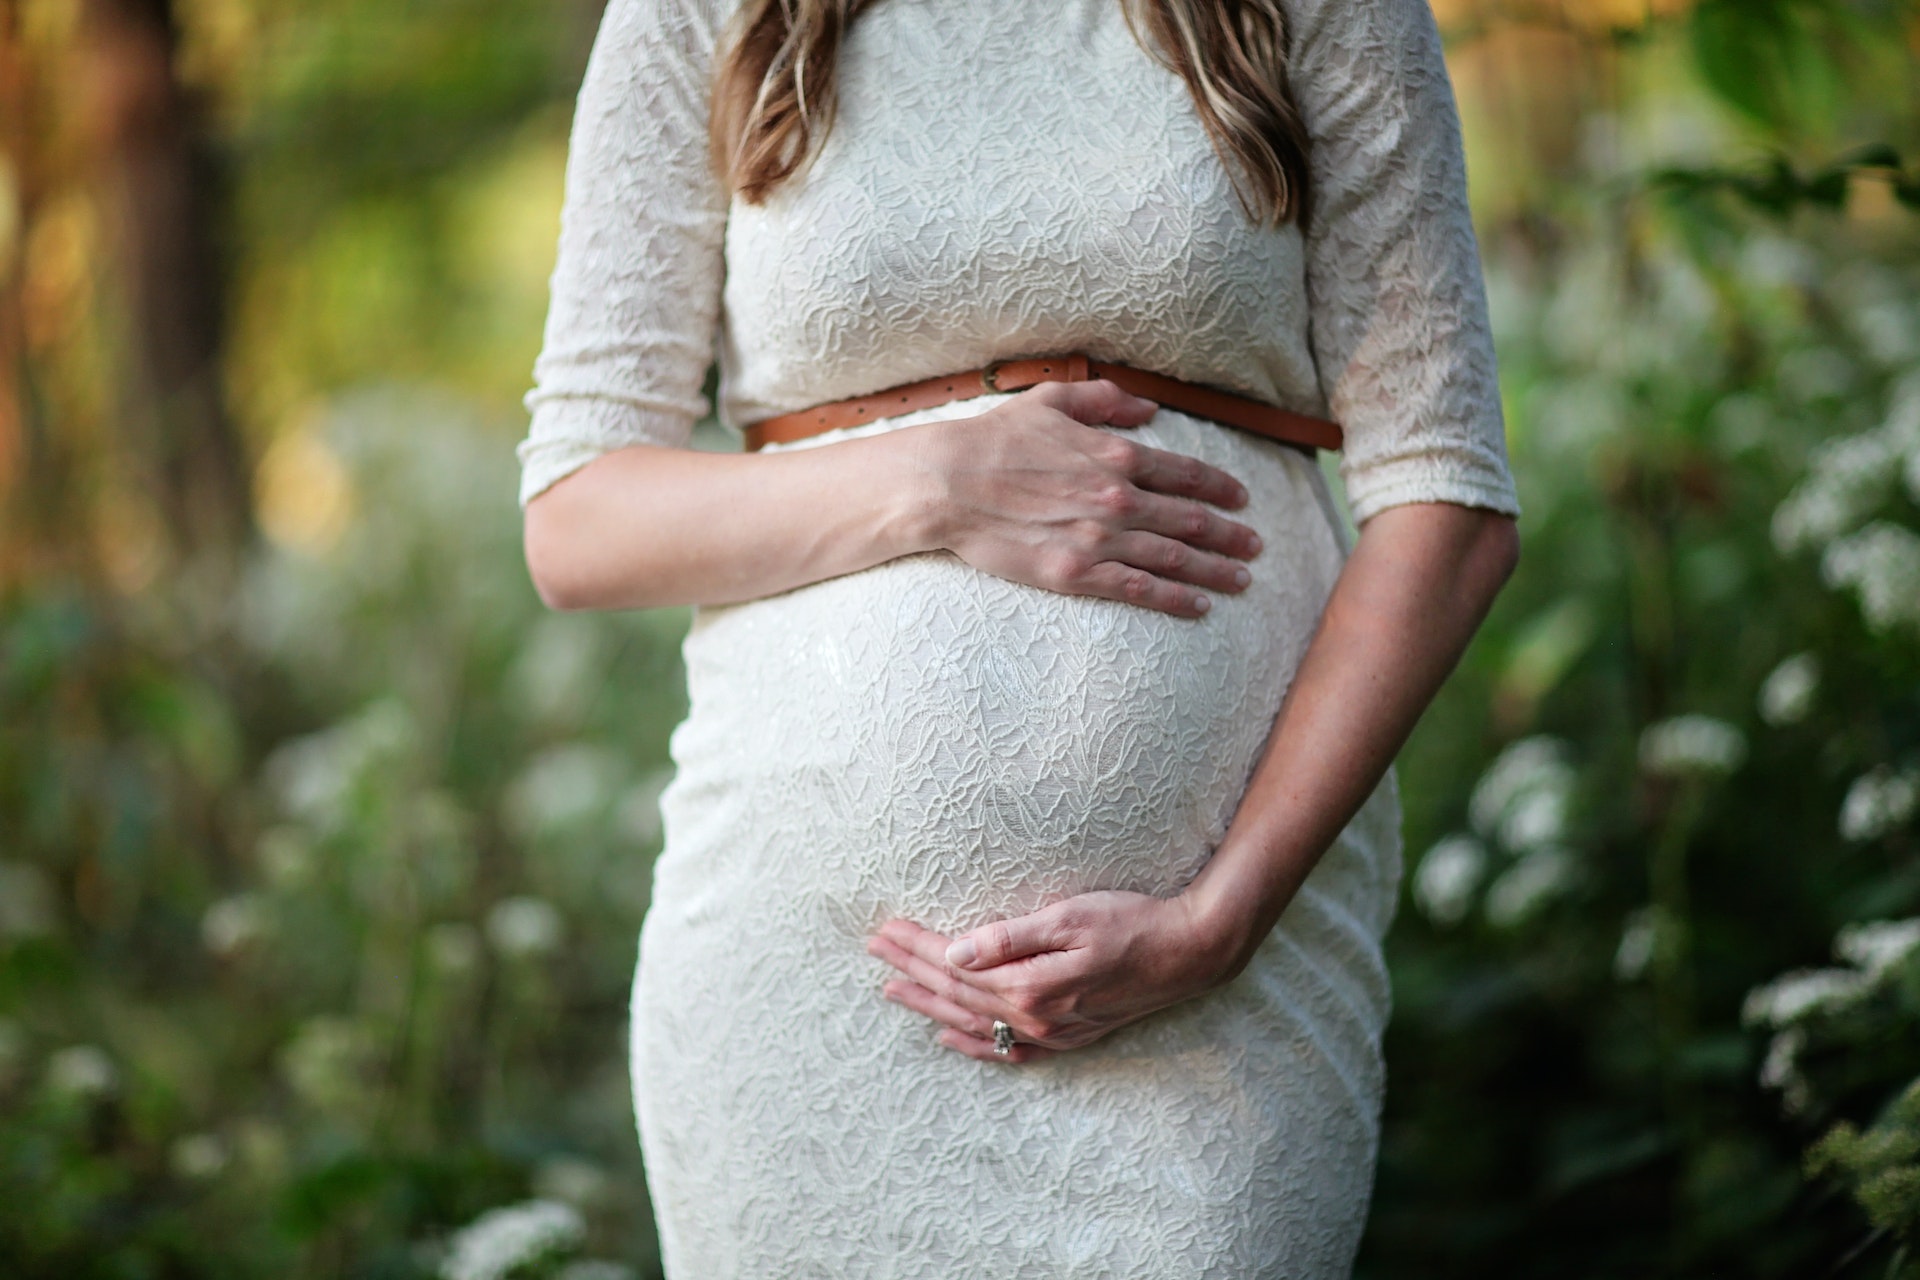 A pregnant woman circles her baby bump | Source: Pexels